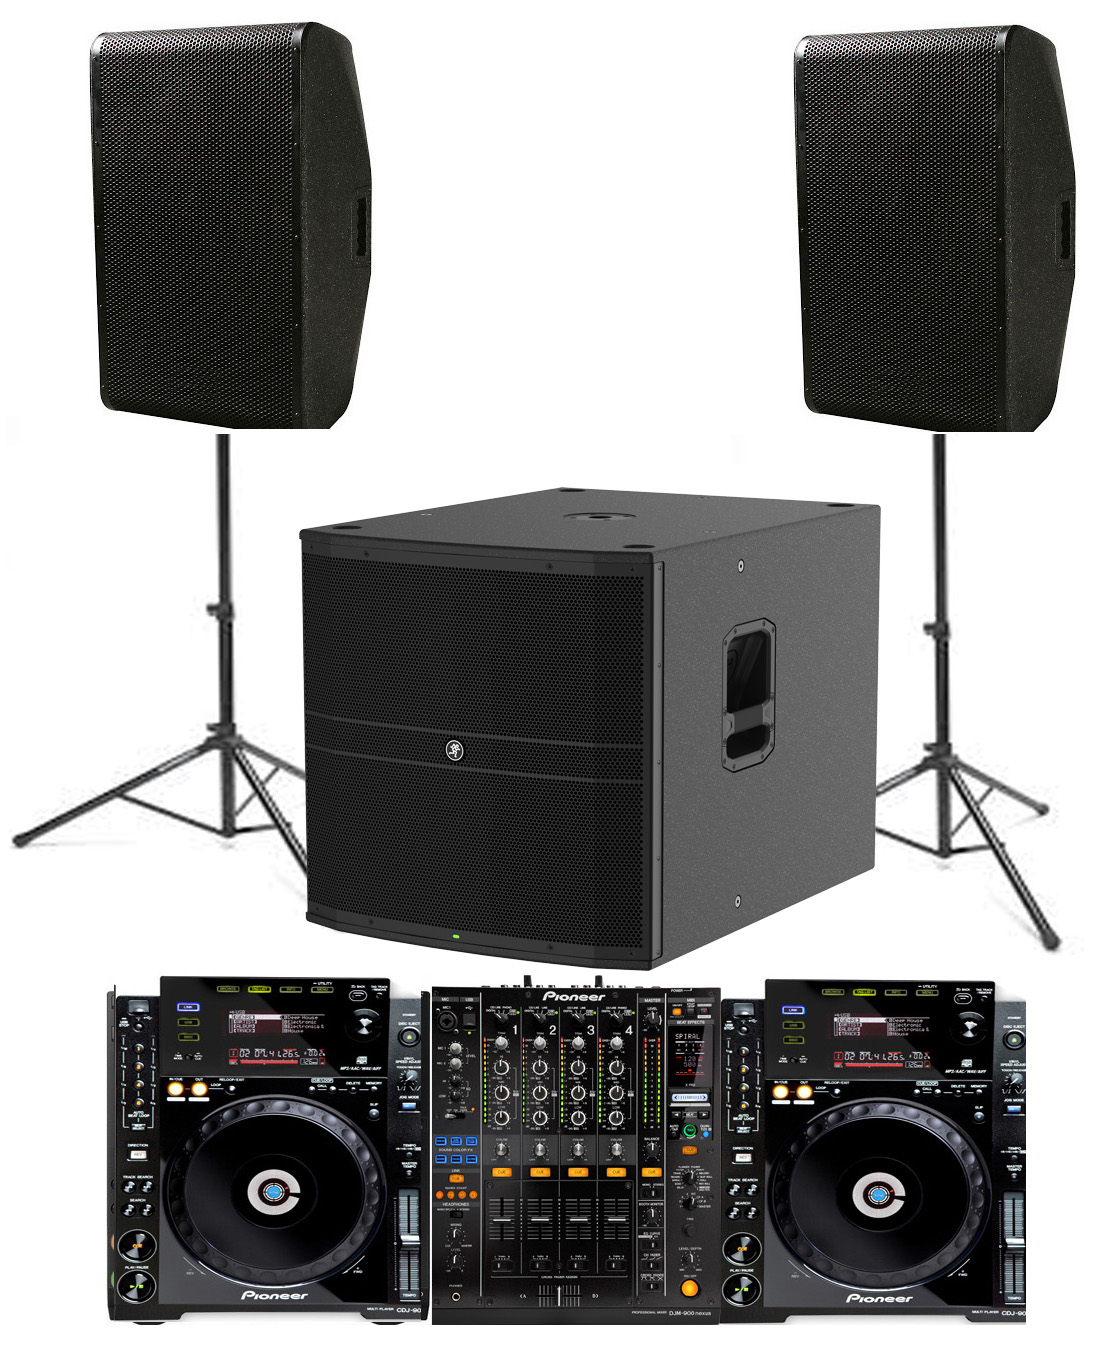 CDJ2000NXS and DJM900NXS with DJ Speakers and sub